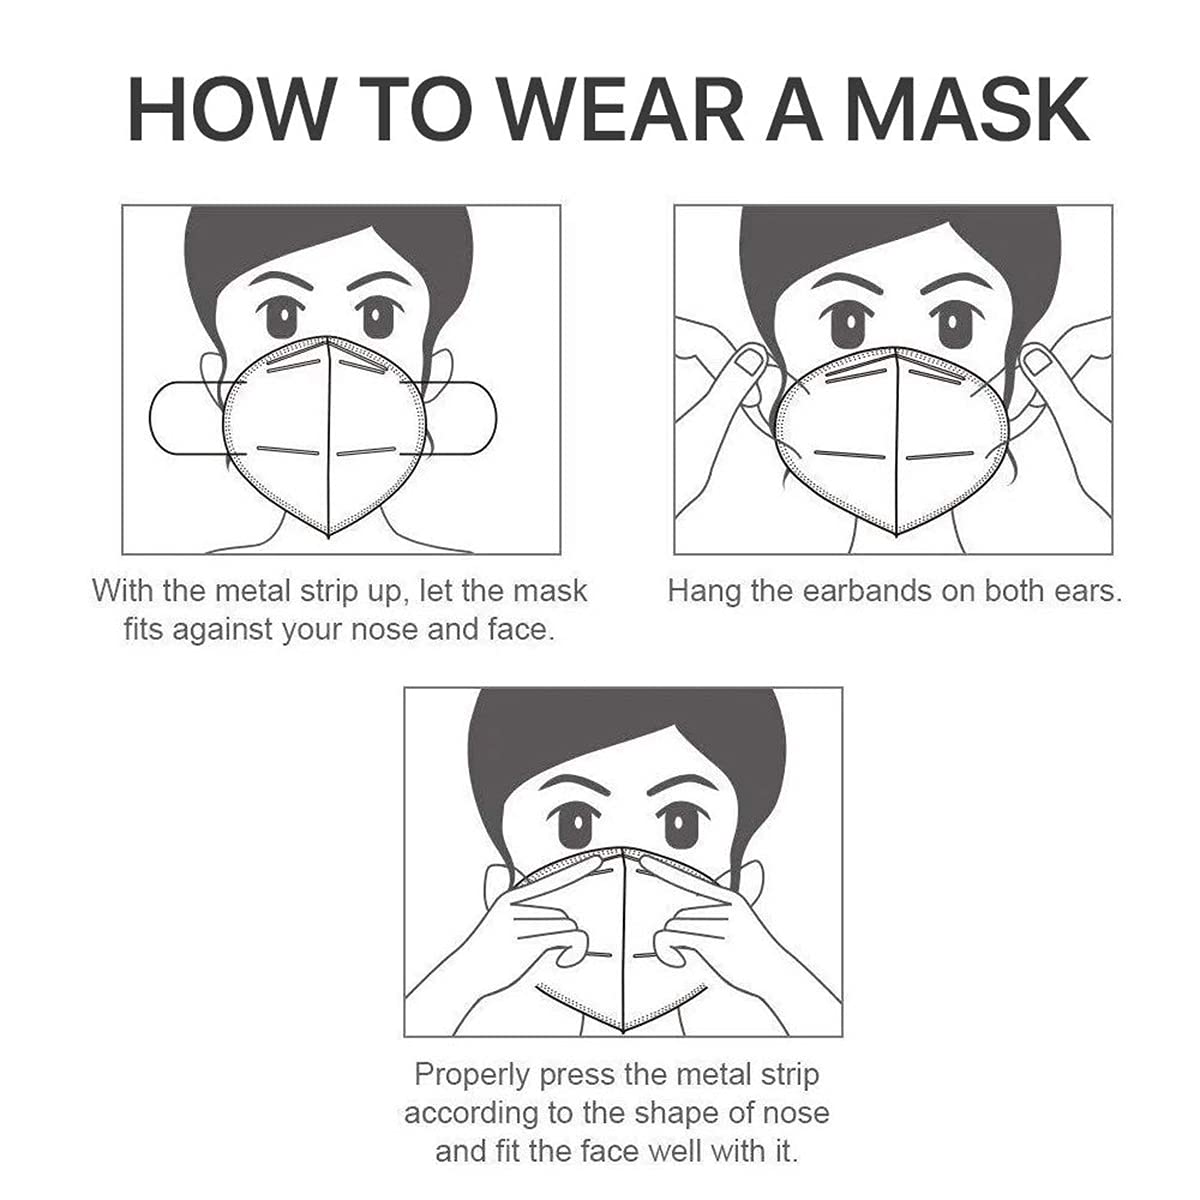 LEMENT 50pcs KN95 Face Mask Black 5 Layer Cup Dust Safety Masks Filter Efficiency≥95% Breathable Elastic Ear Loops Black Masks